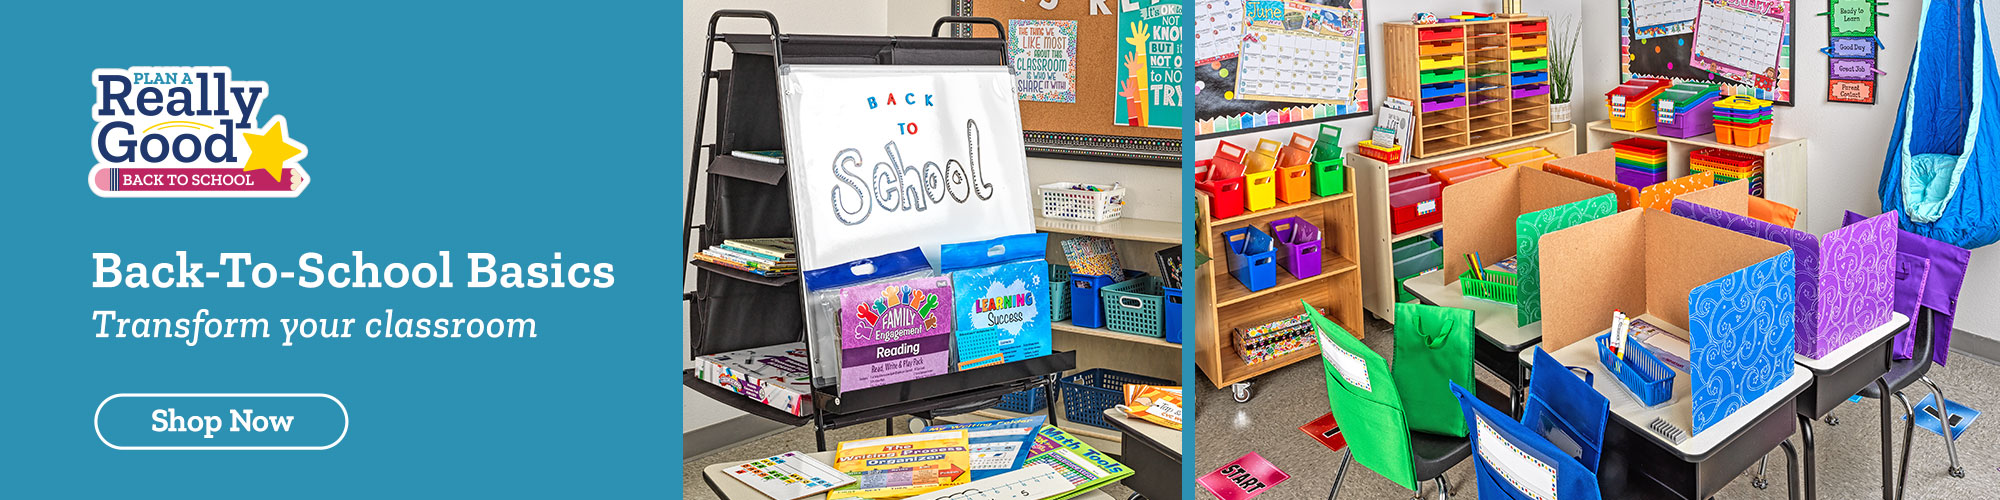 Back-to-School Basics
Transform your classroom